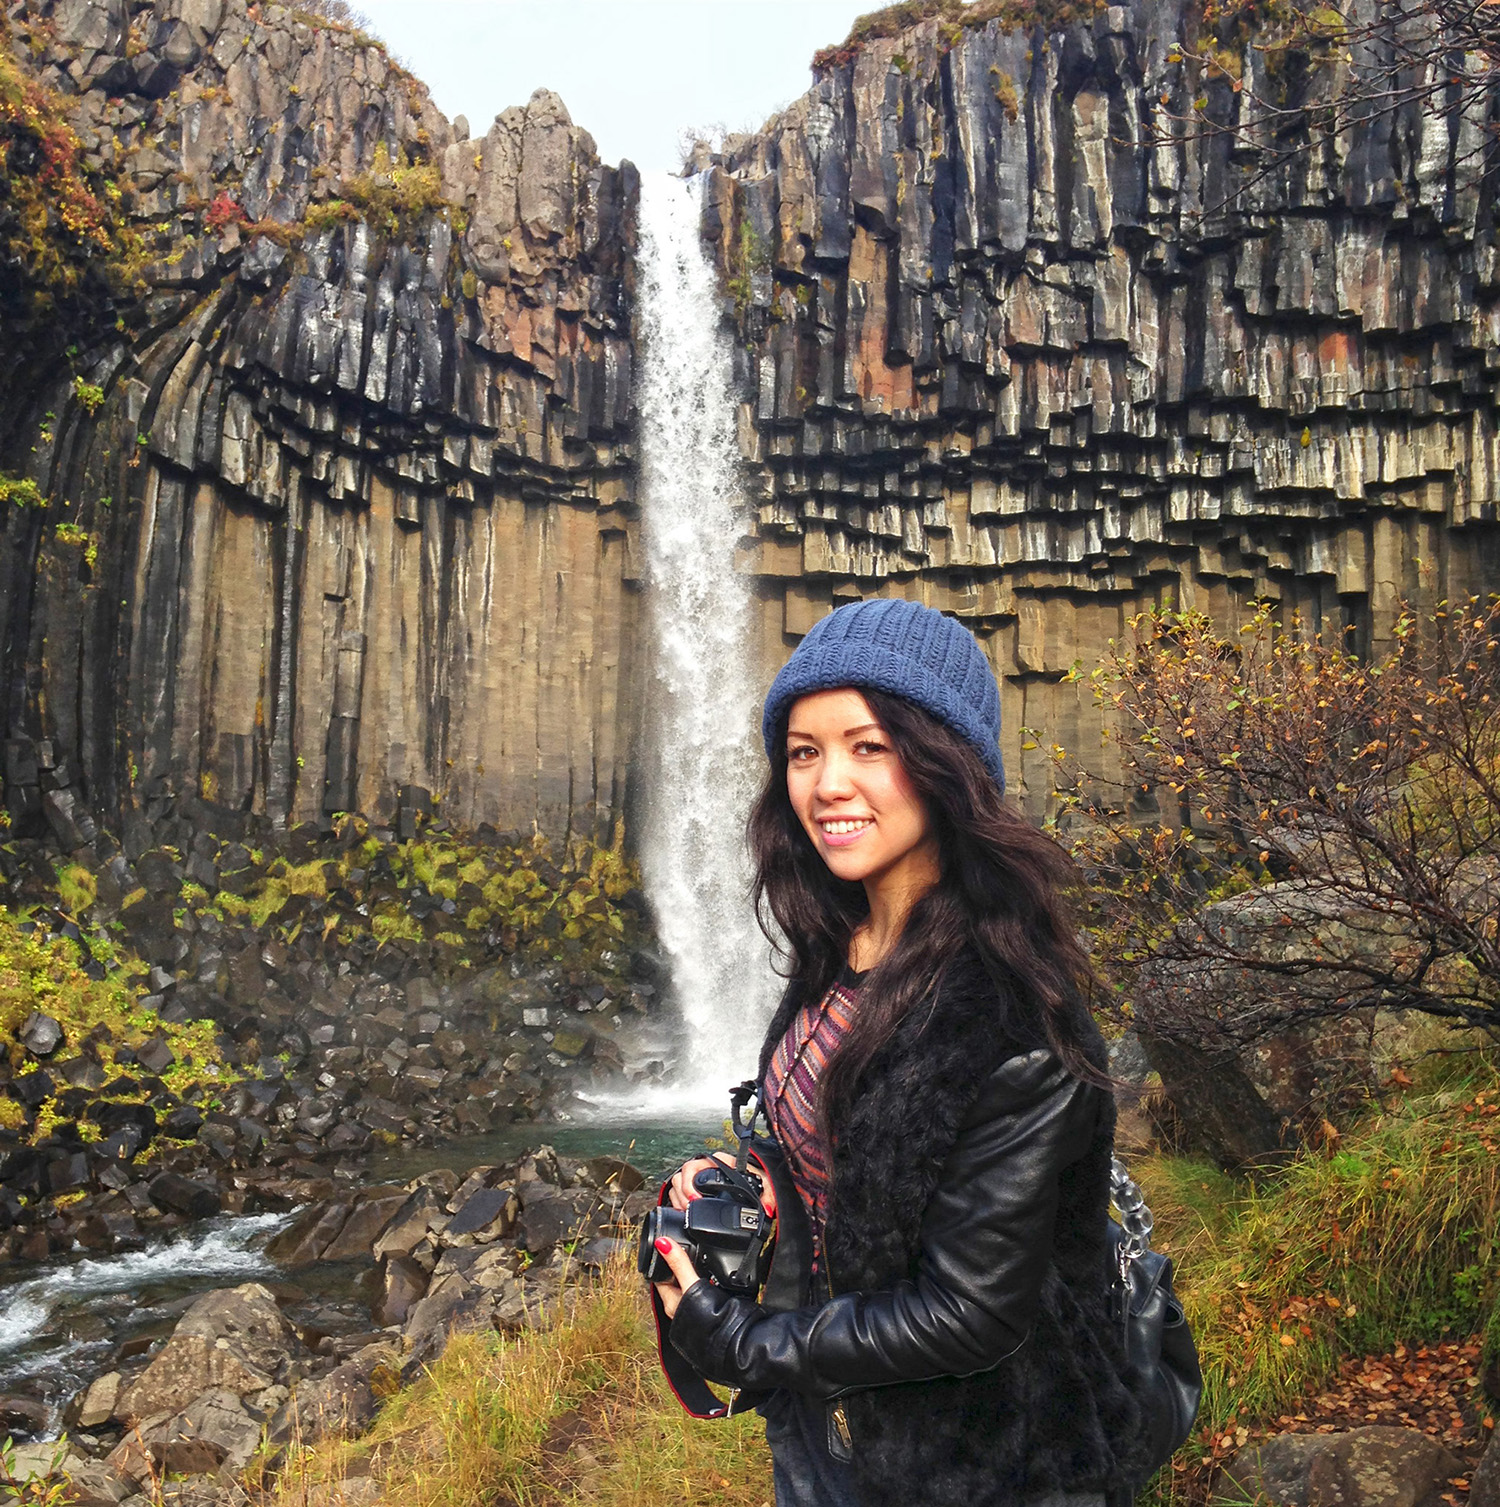 Basalt columns at Svartifoss waterfall in Iceland